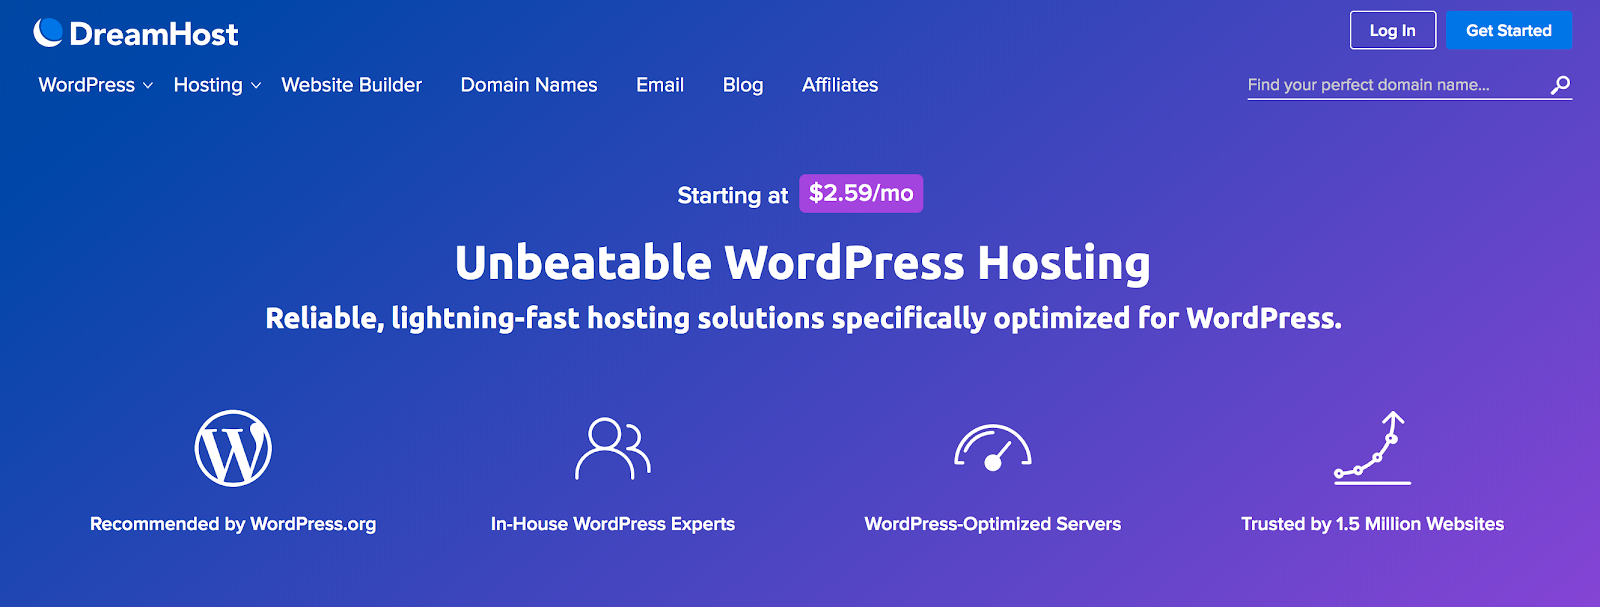 DreamHost’s WordPress Hosting